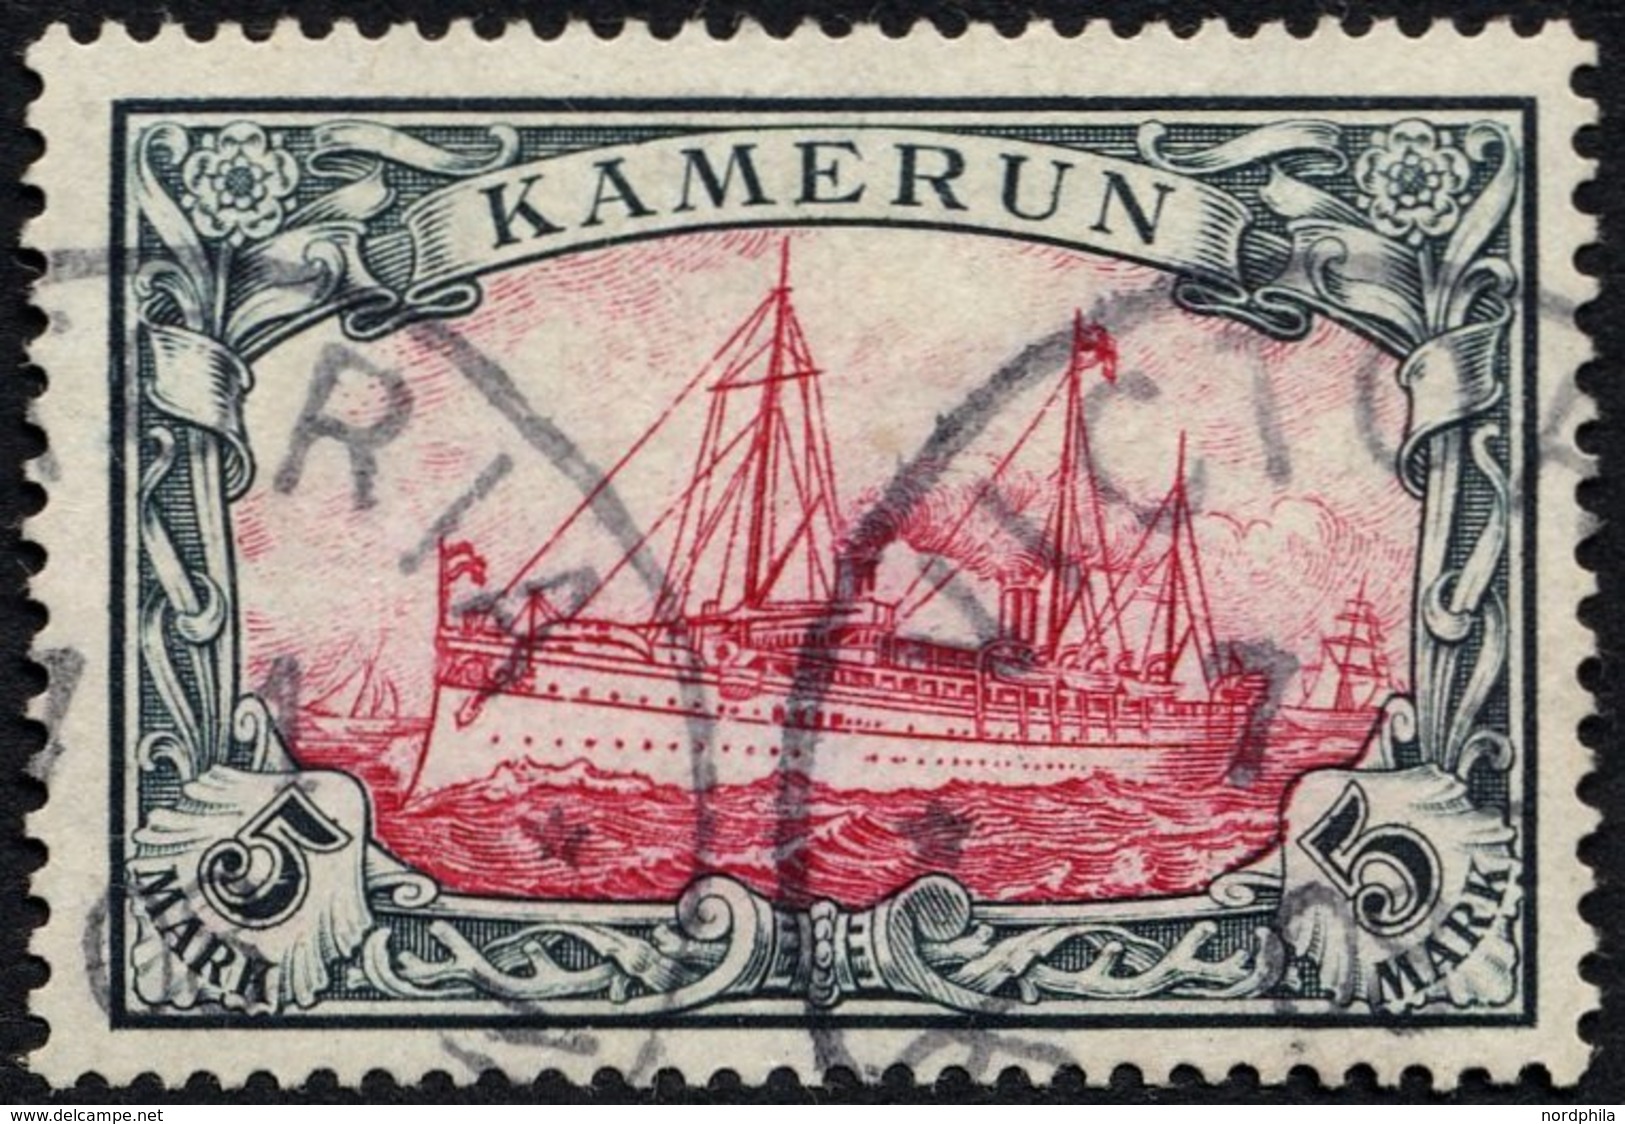 KAMERUN 19 O, 1900, 5 M. Grünschwarz/bräunlichkarmin, Ohne Wz., Stempel VICTORIA, Pracht, Signiert Senf, Mi. 600.- - Camerun